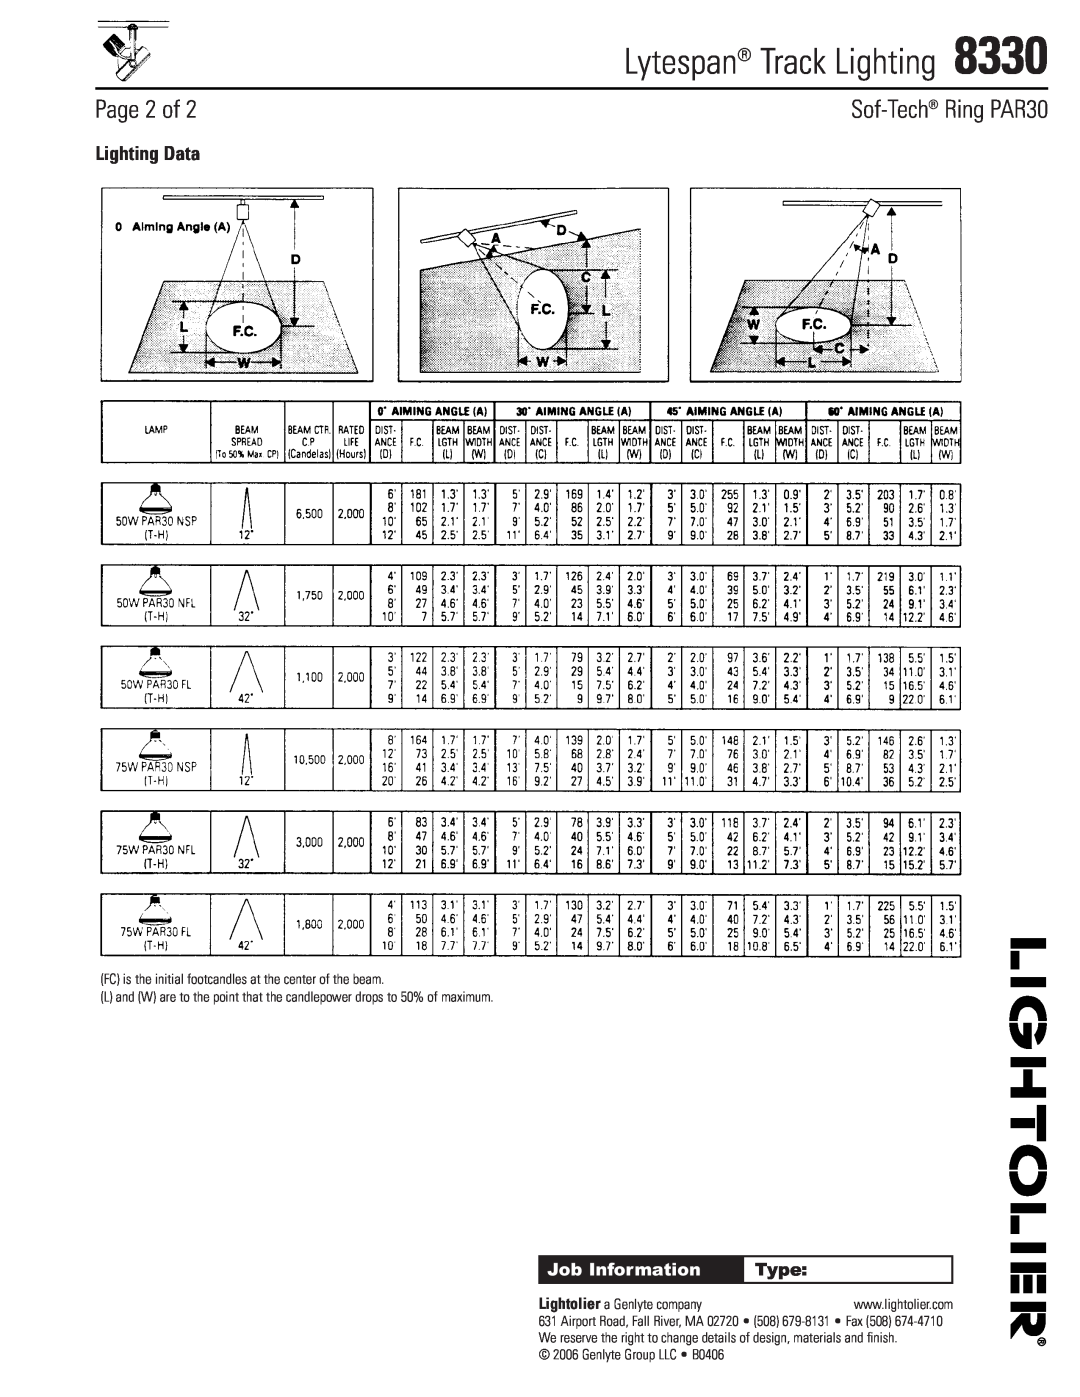 Lightolier 8330 manual Page 2 of, Lighting Data, Type, Lytespan Track Lighting, Sof-Tech Ring PAR30, Job Information 